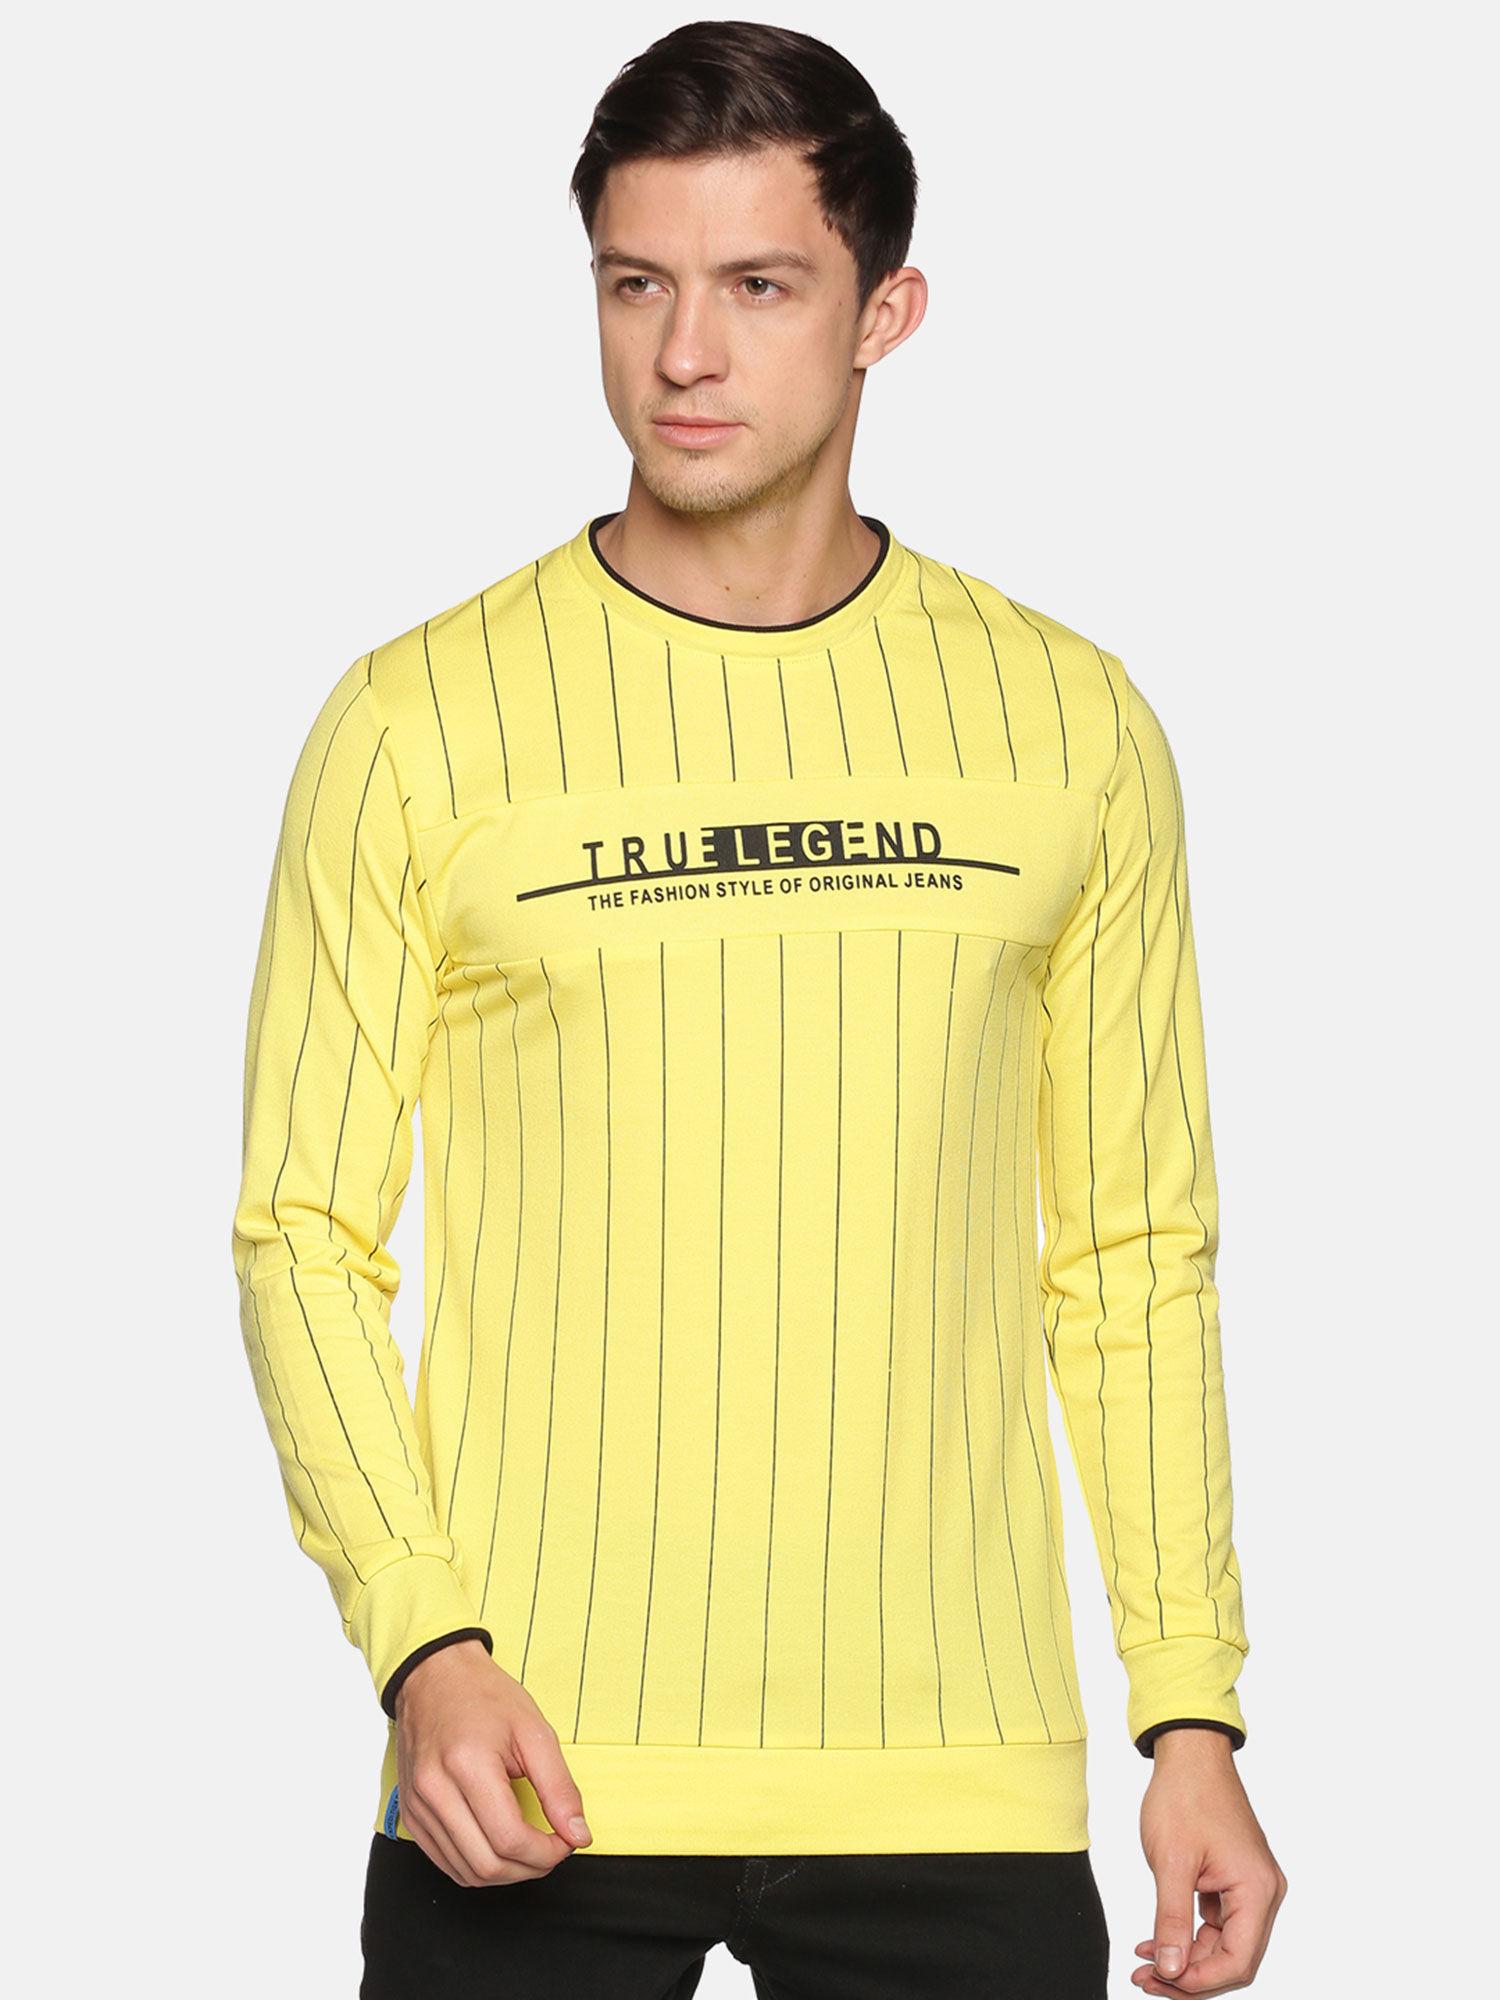 men's cotton casual yellow sweatshirt